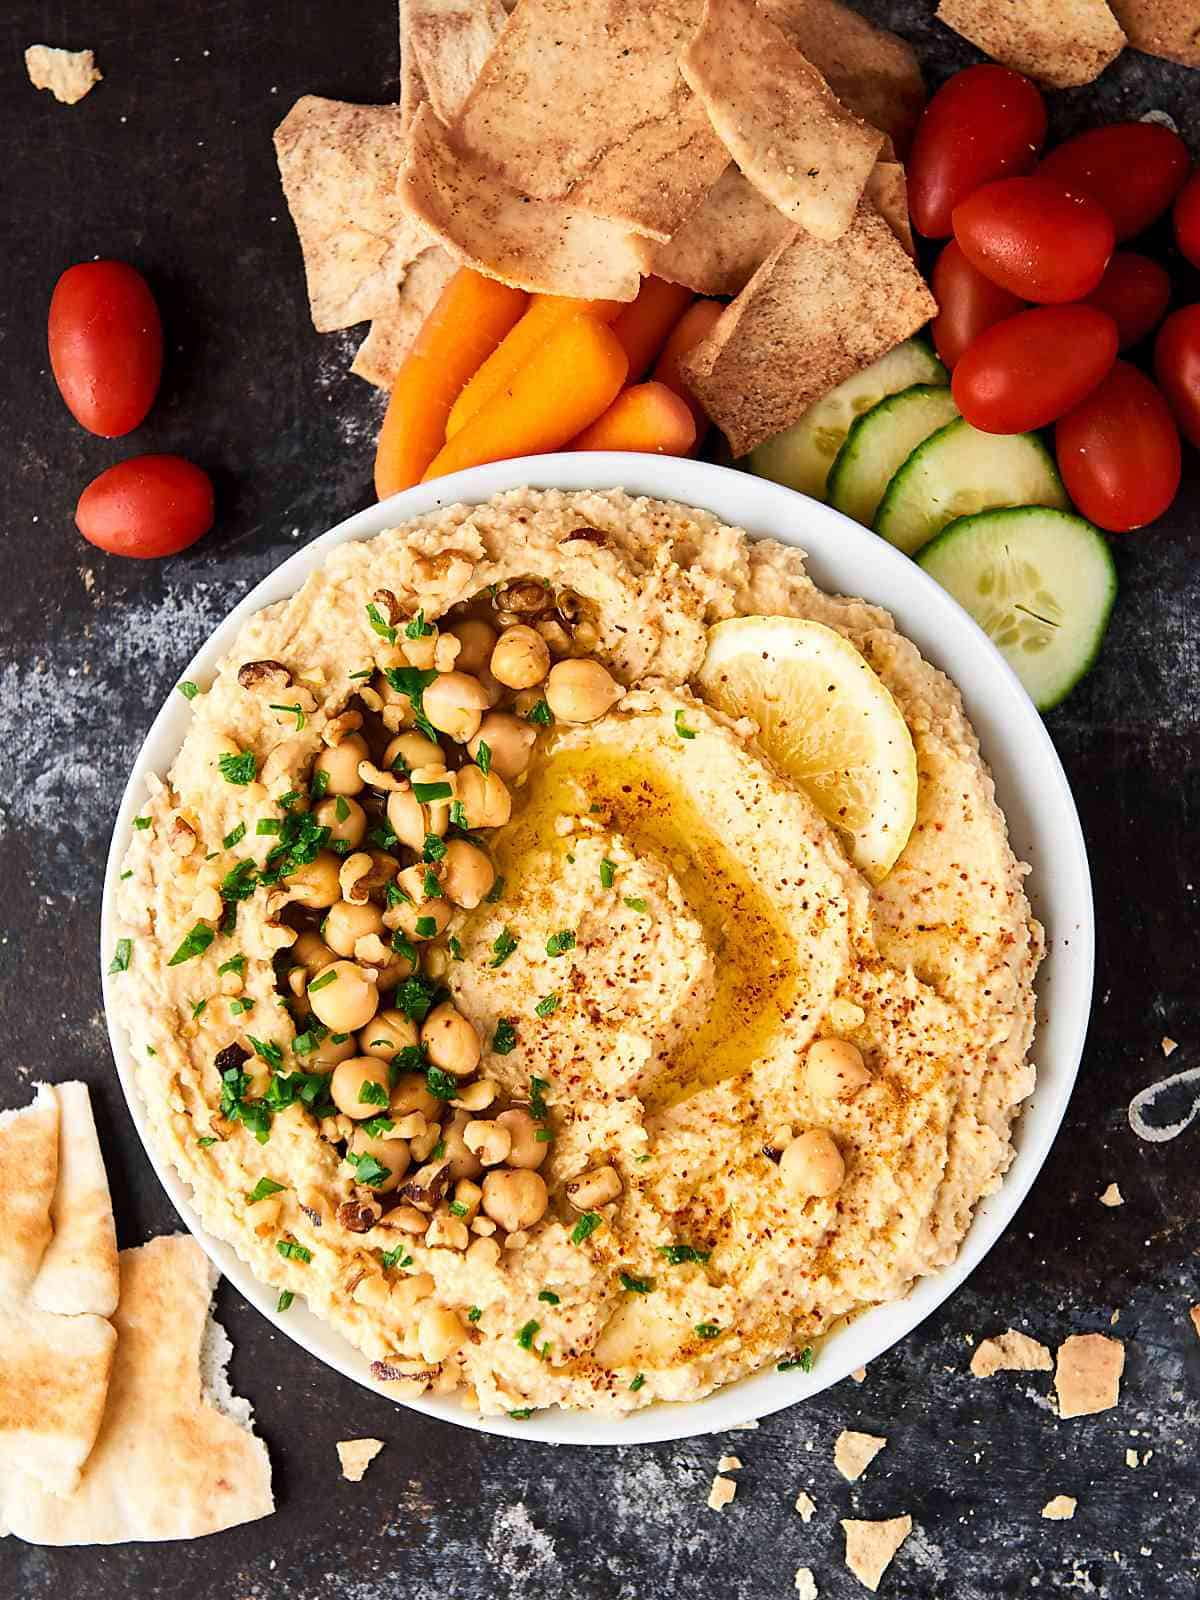 Syrian Hummus Recipe - Show Me the Yummy